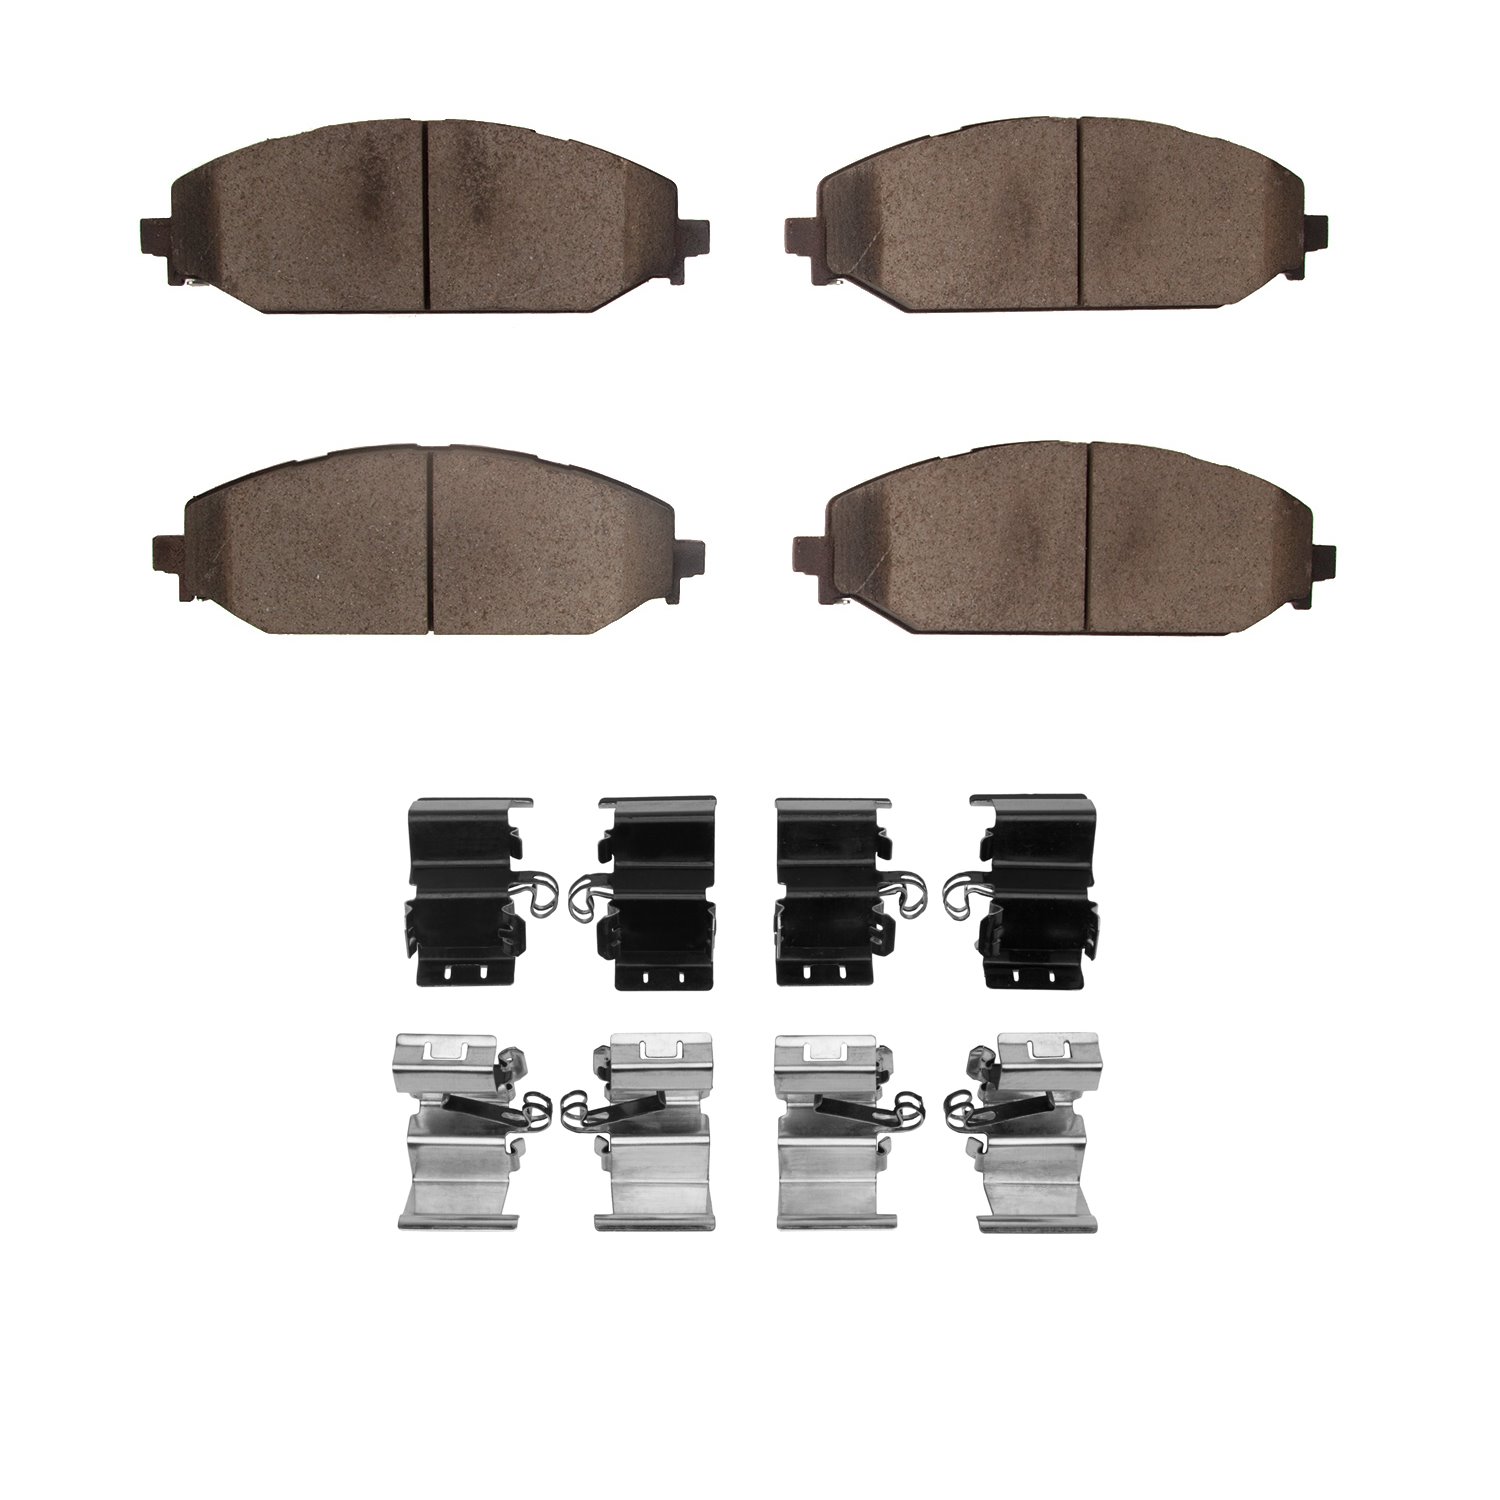 1551-2179-01 5000 Advanced Ceramic Brake Pads & Hardware Kit, Fits Select Mopar, Position: Front